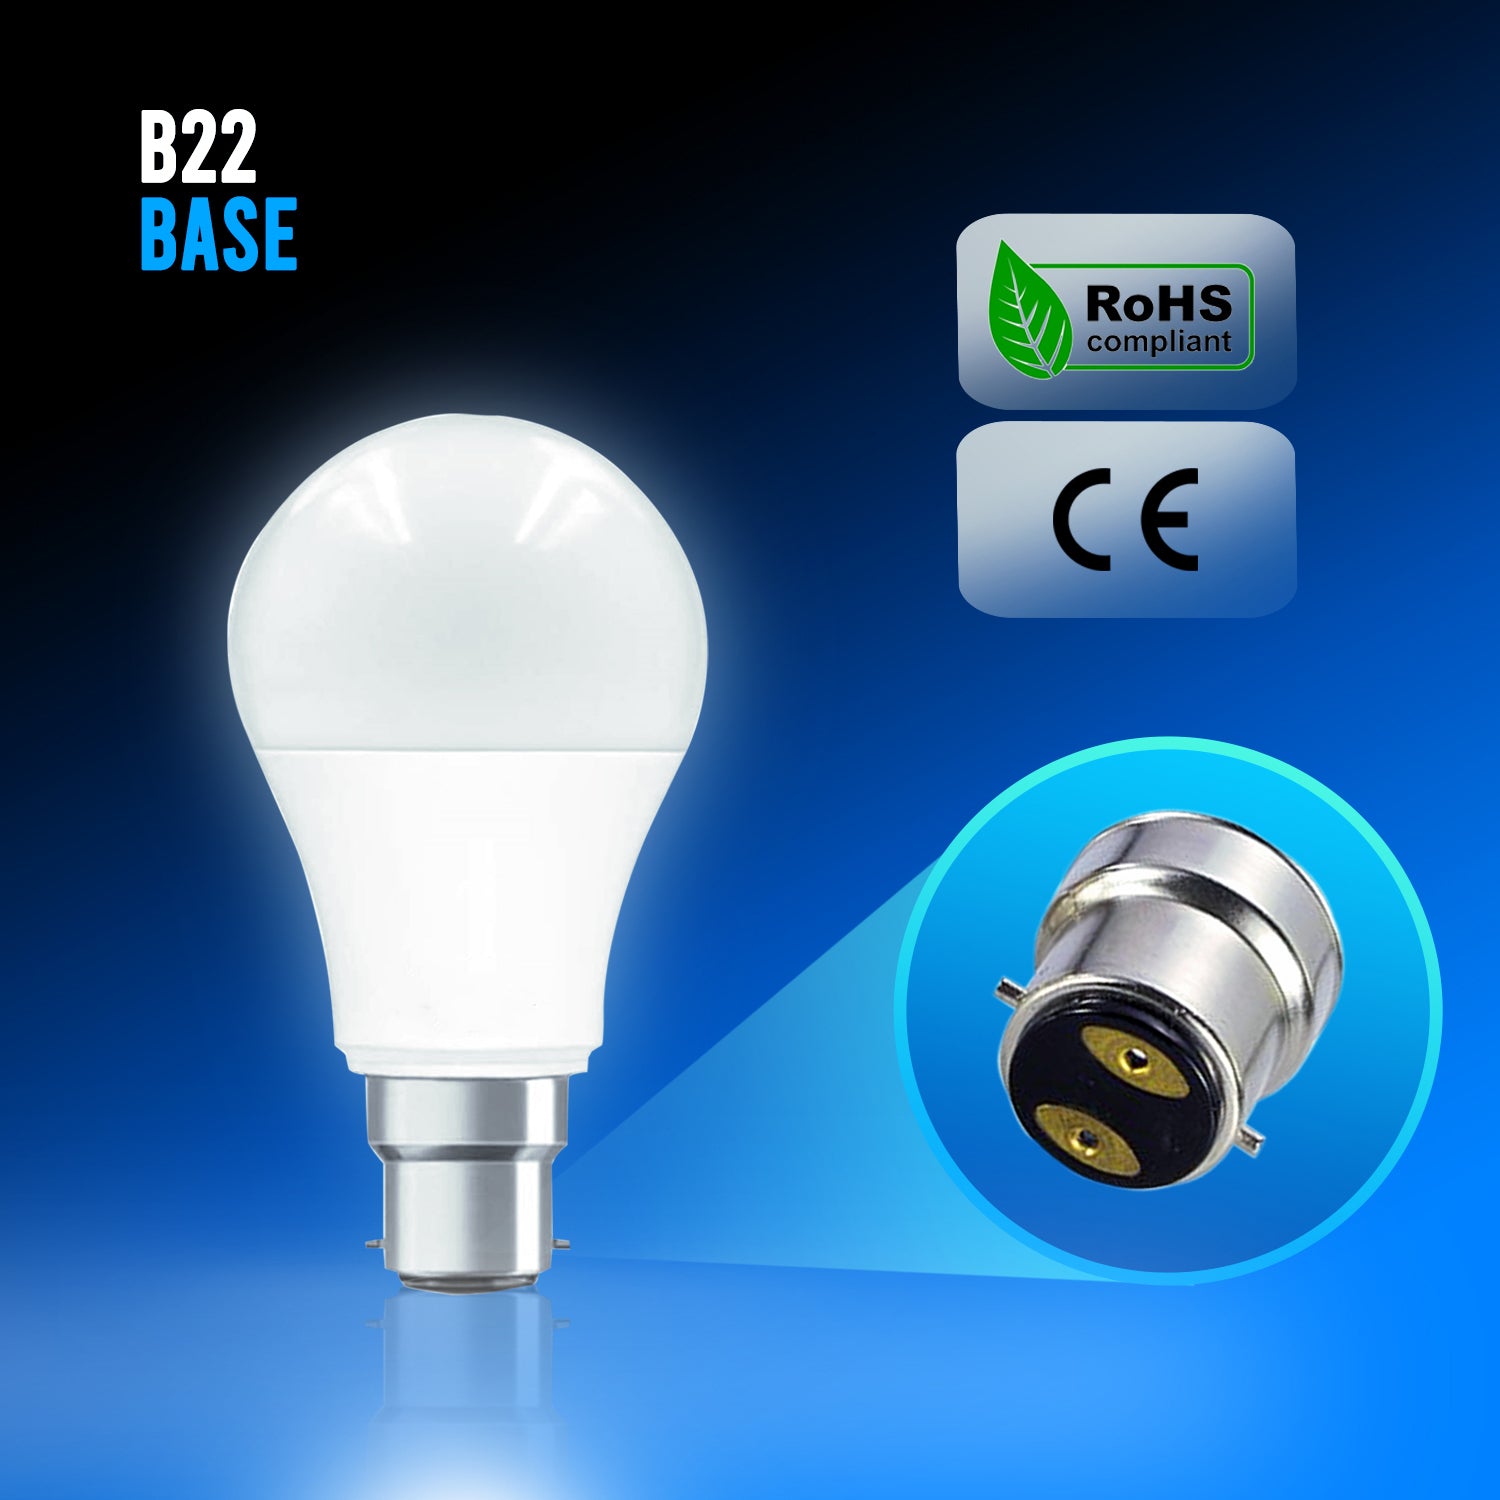 15W B22 Screw LED Light GLS bulbs, Energy Saving Edison Cool White 6000K non dimmable lights